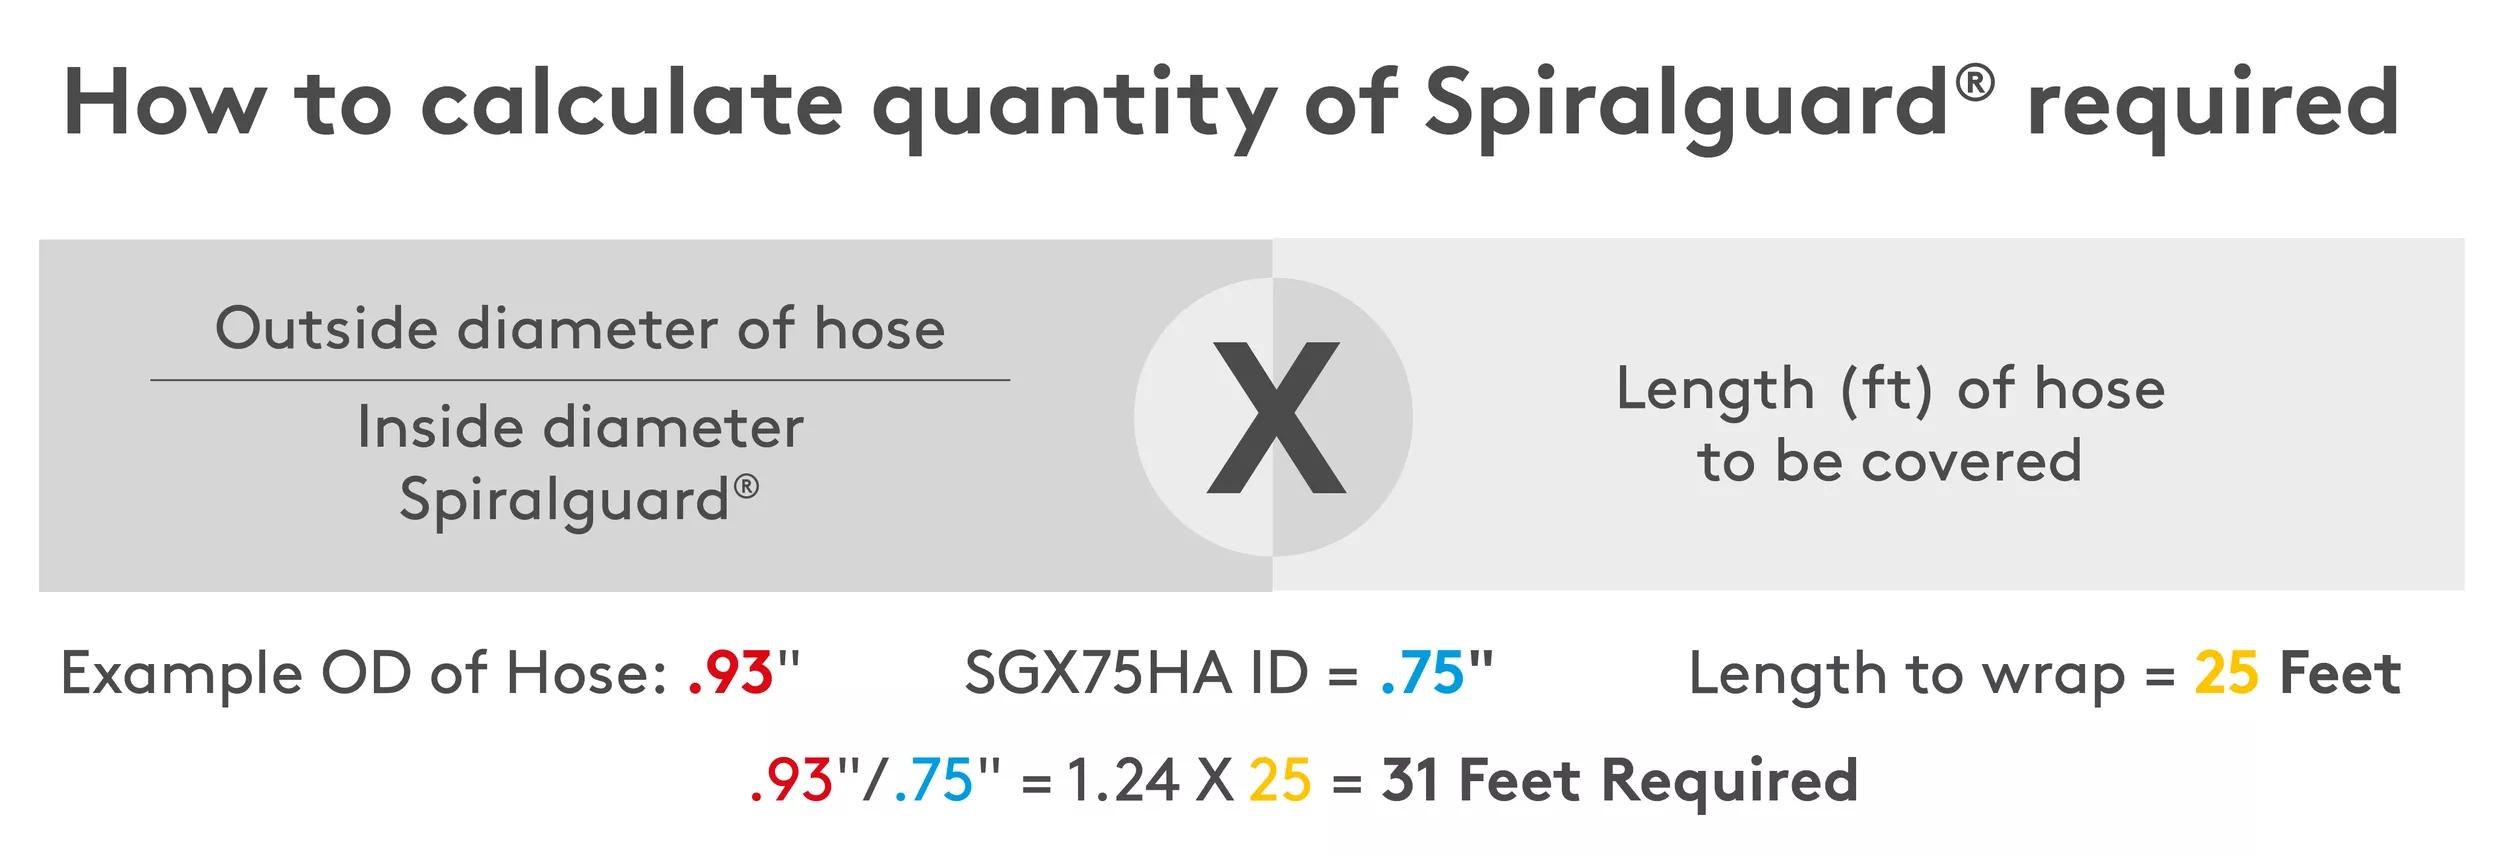 Calculate Spiralguard quantity